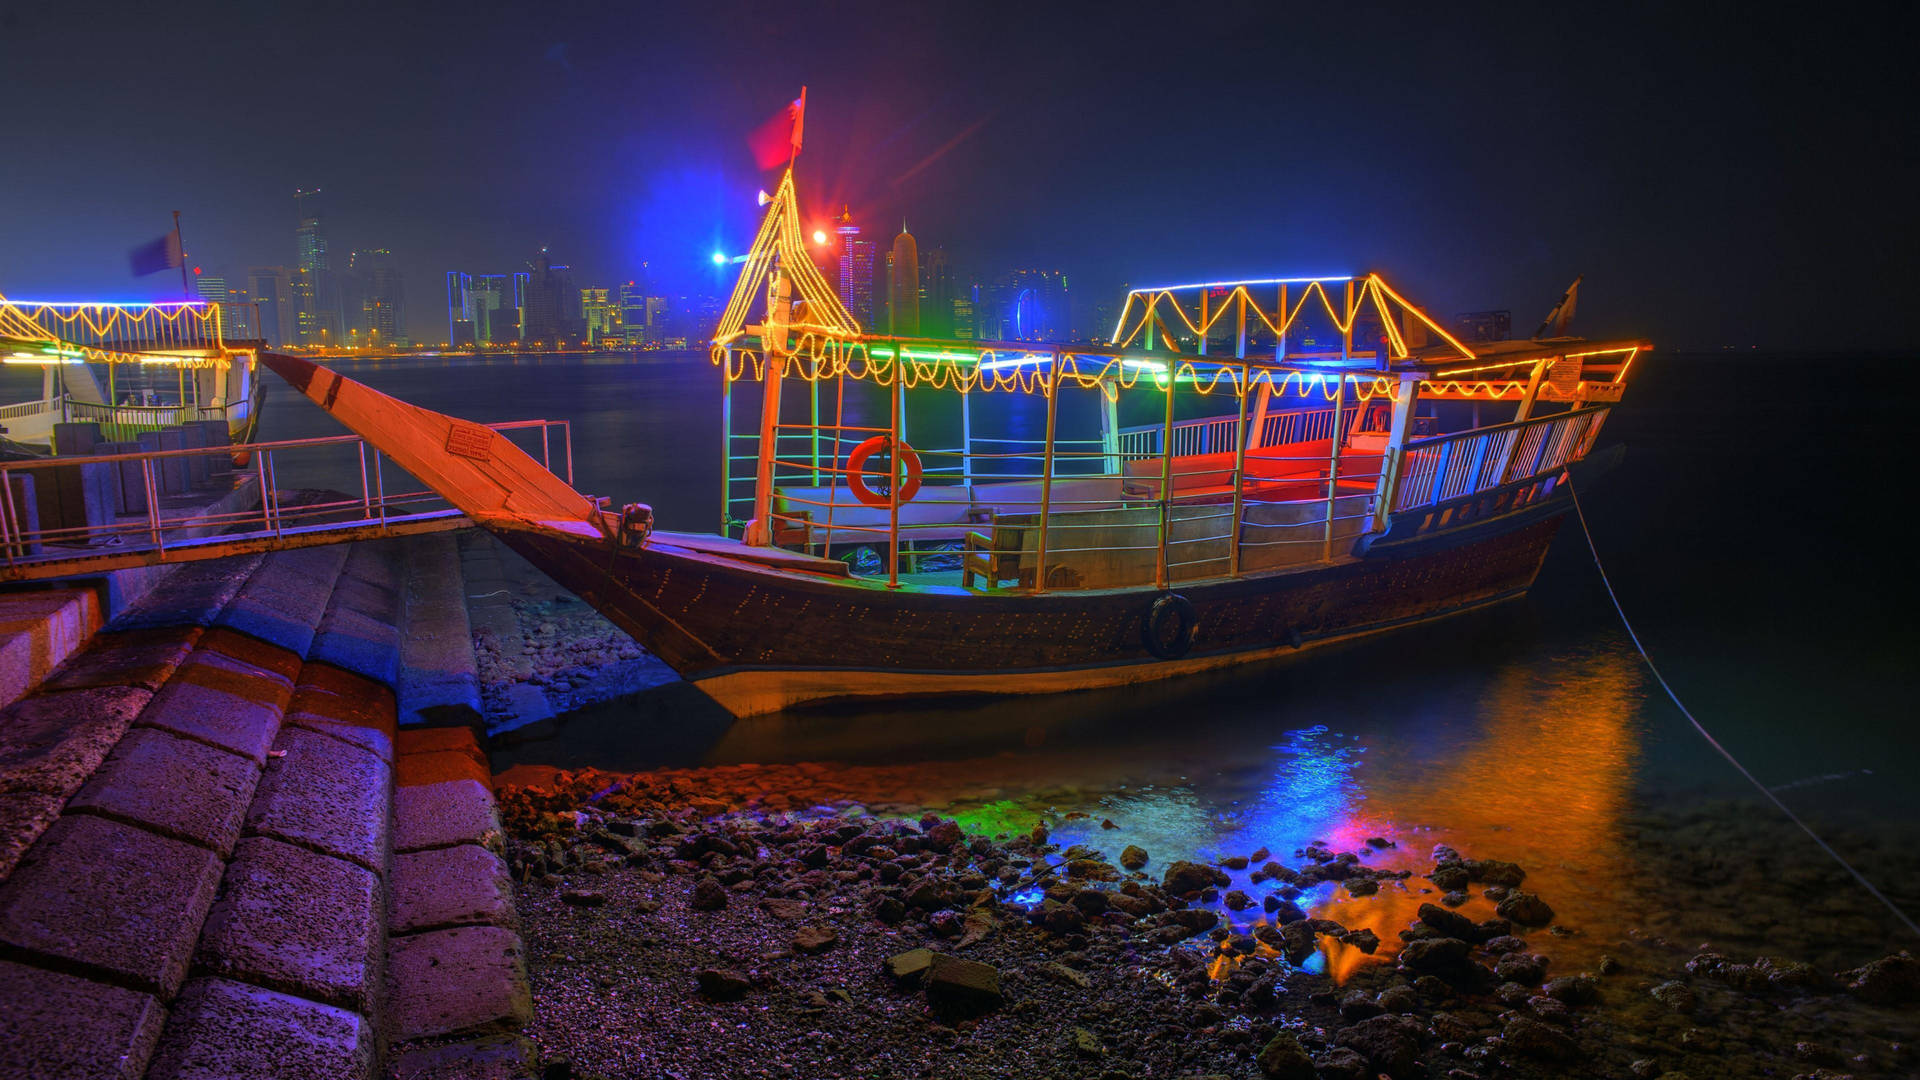 Dohacity Boat Illuminated Can Be Translated To Spanish As 